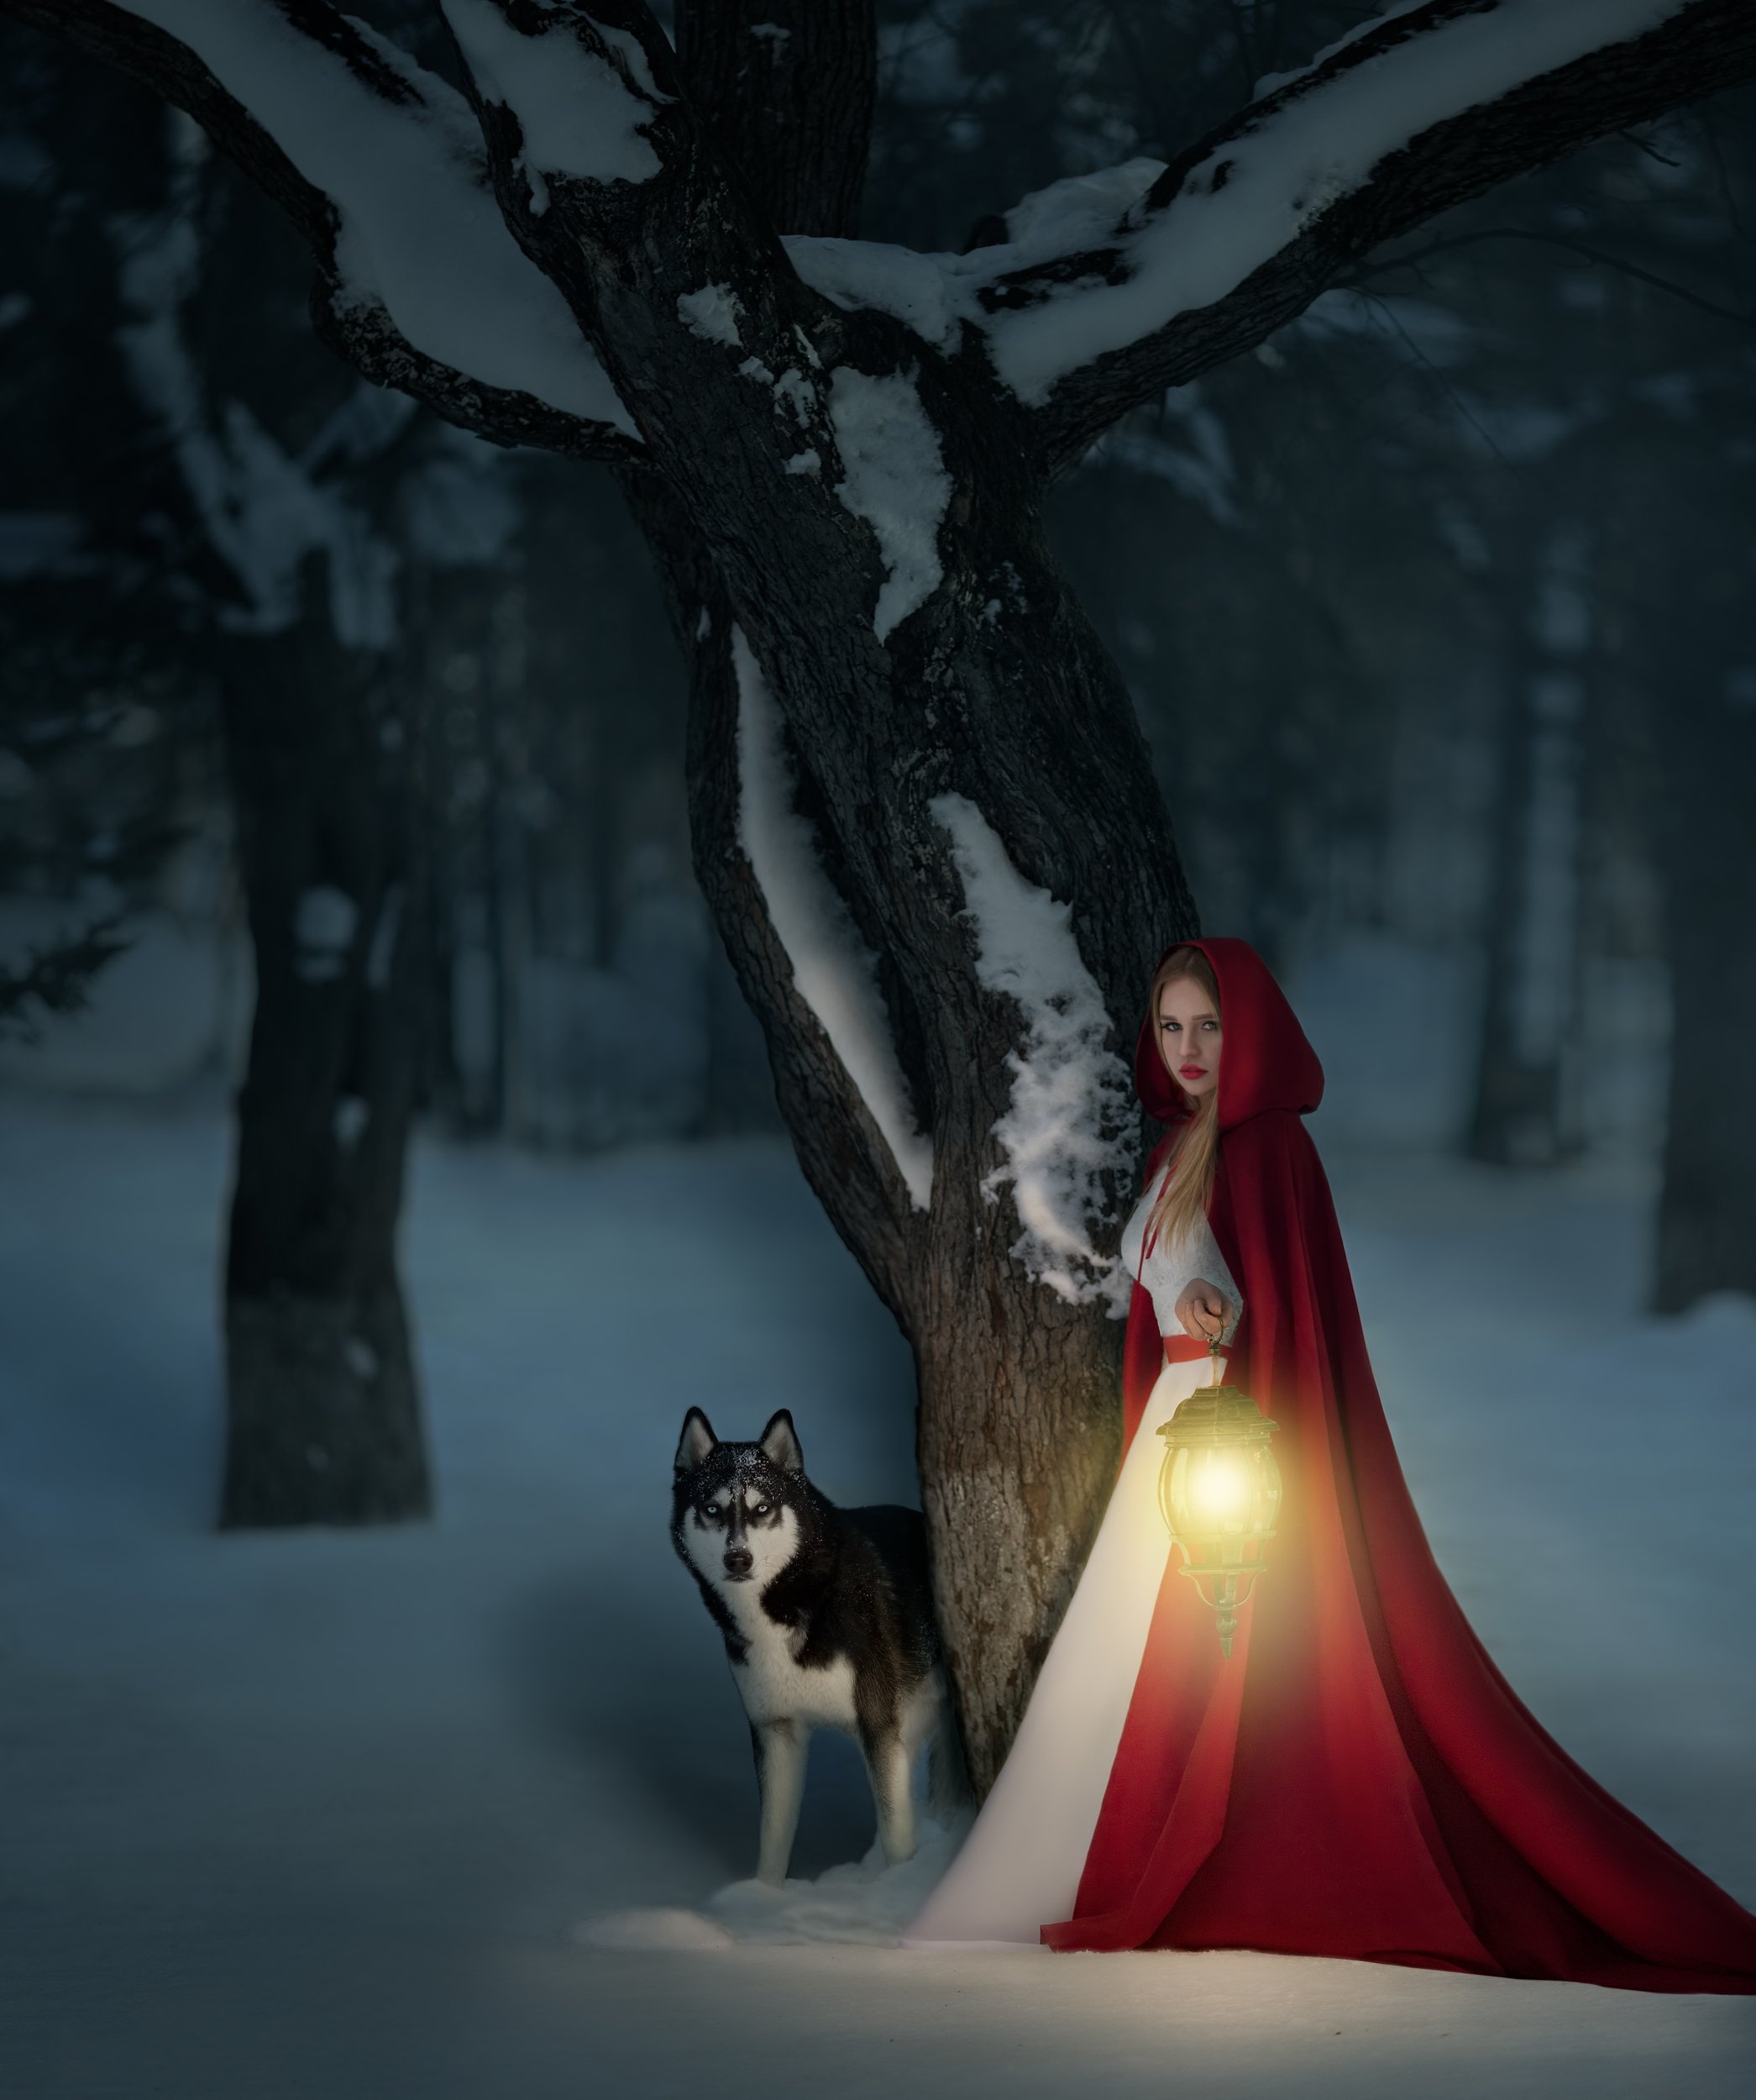 #husky, #dog, #girl, #night, #redhood, #winter, #forest, #mystery, #lighter, #lamp #краснаяшапочка #сказка #fairytale, Ксения Лыгина